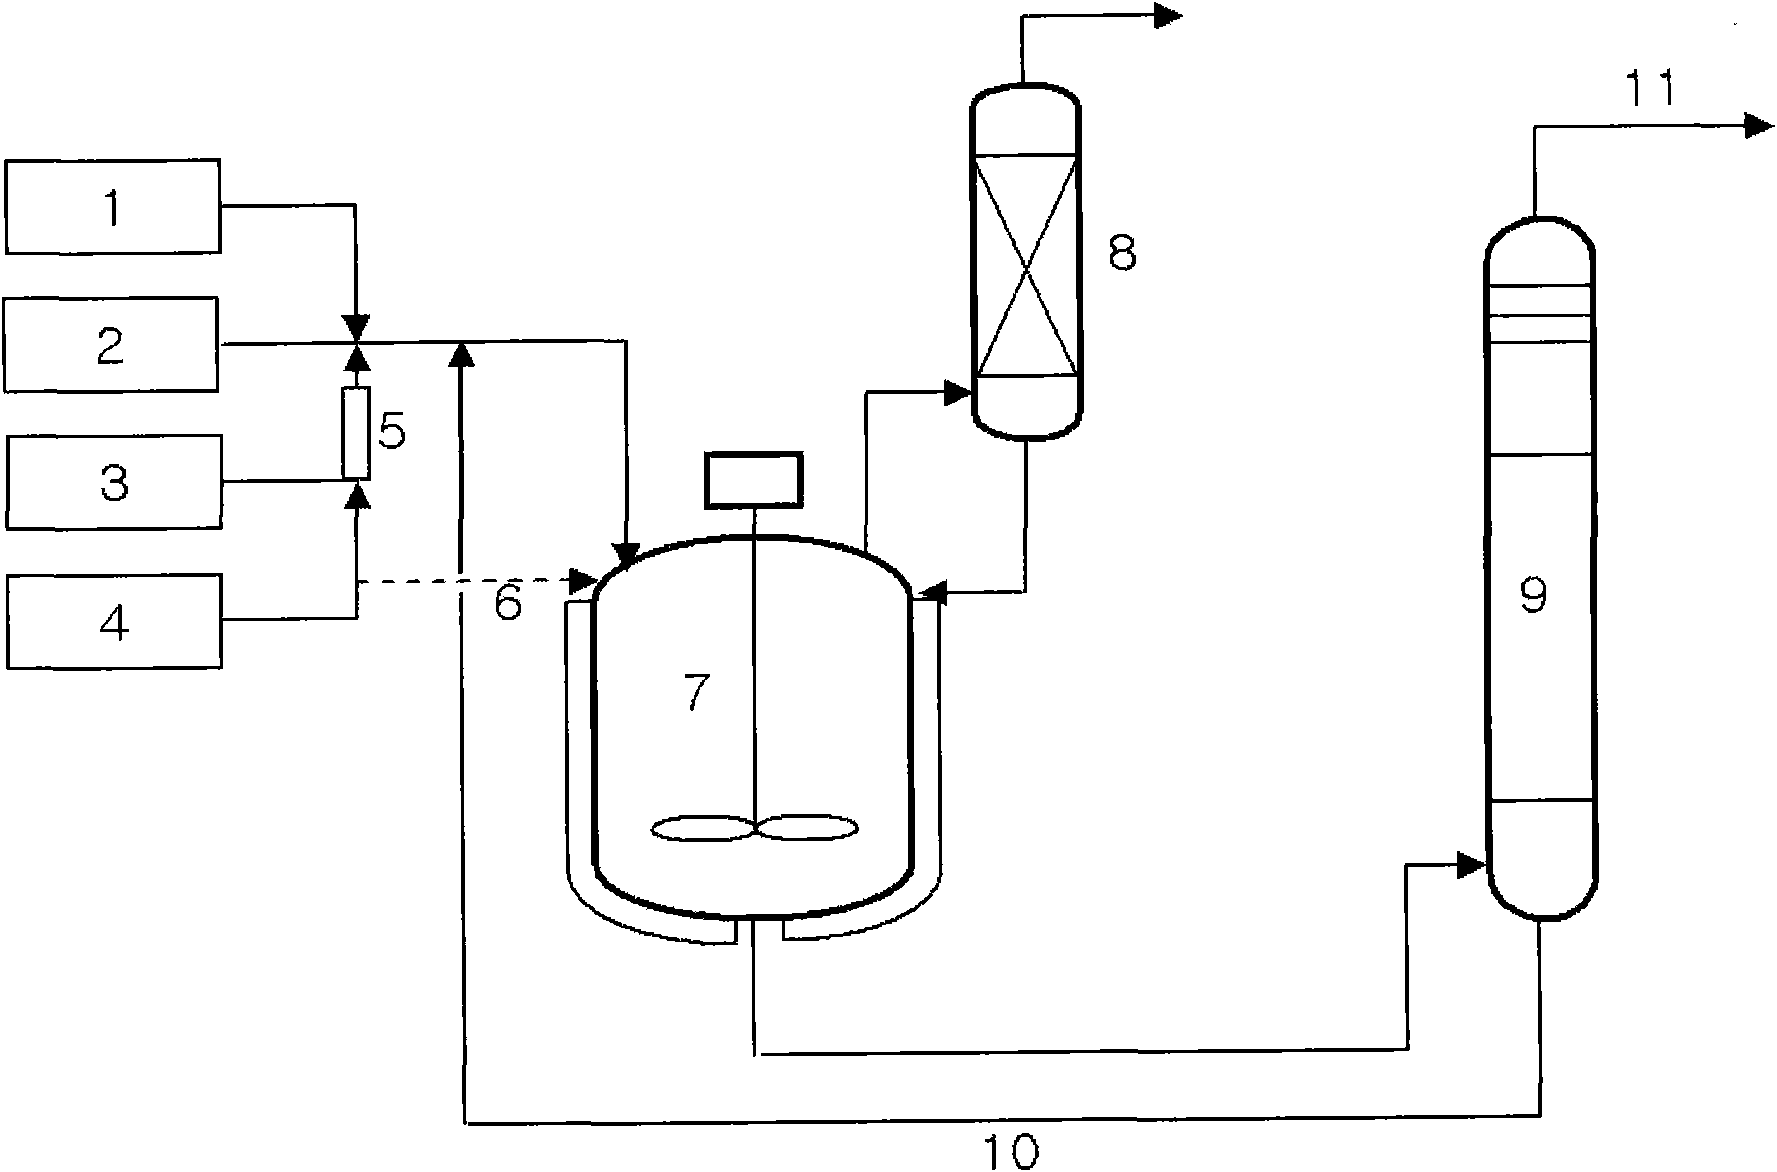 Preparation method for (meth)acrylate